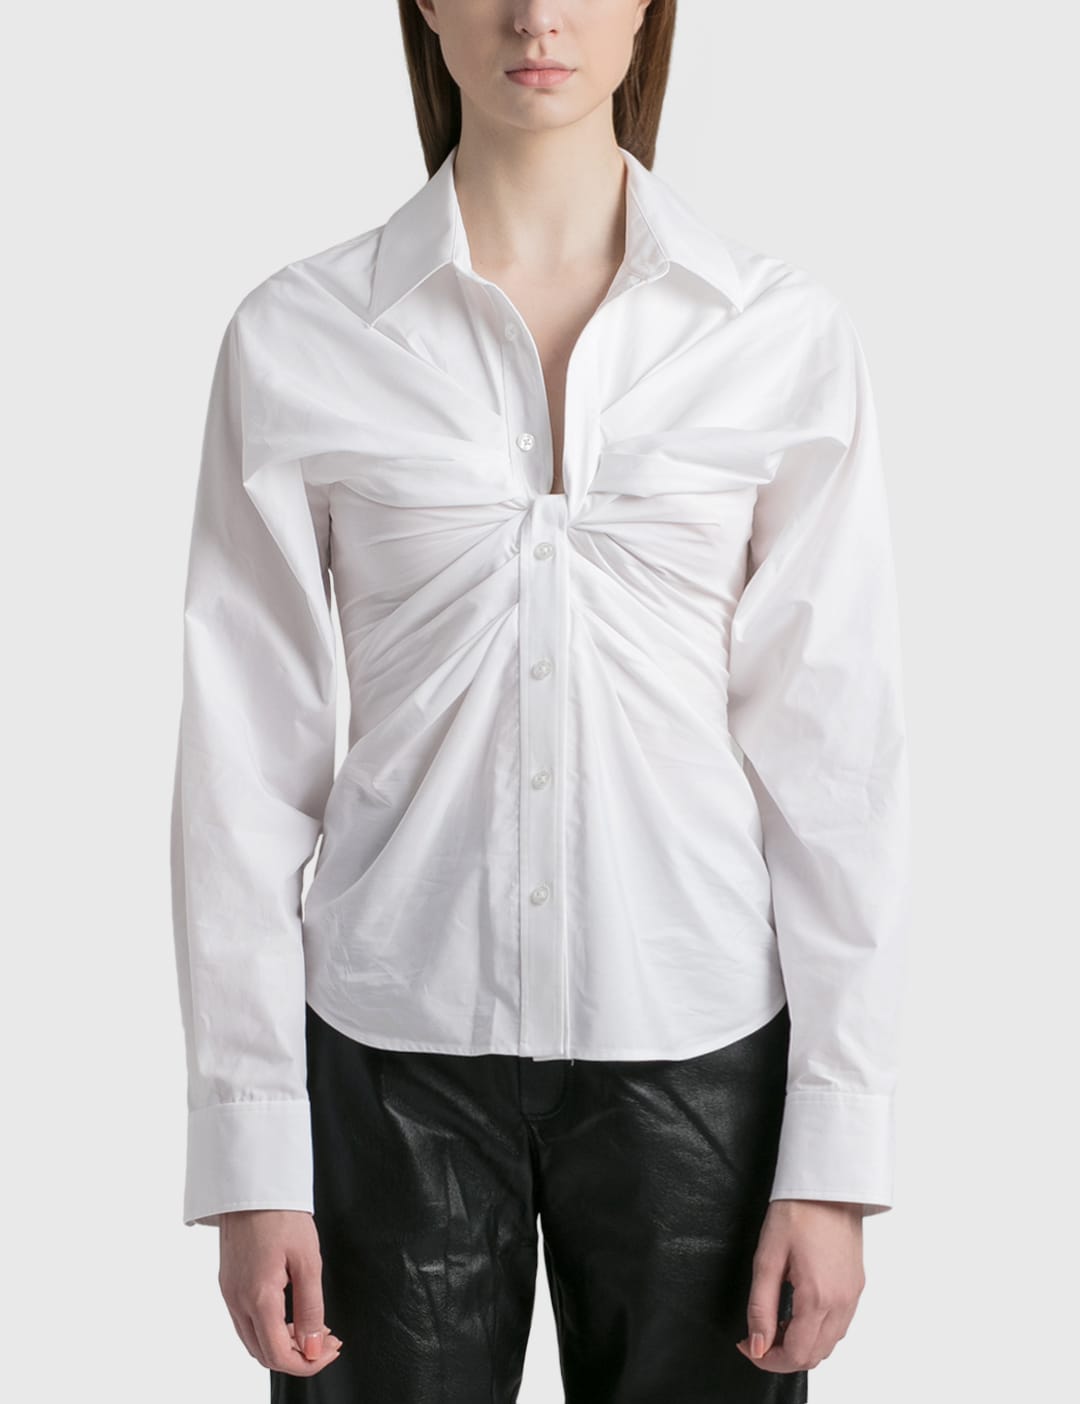 T By Alexander Wang - オープンツイスト フロントプラケットシャツ | HBX -  ハイプビースト(Hypebeast)が厳選したグローバルファッション&ライフスタイル